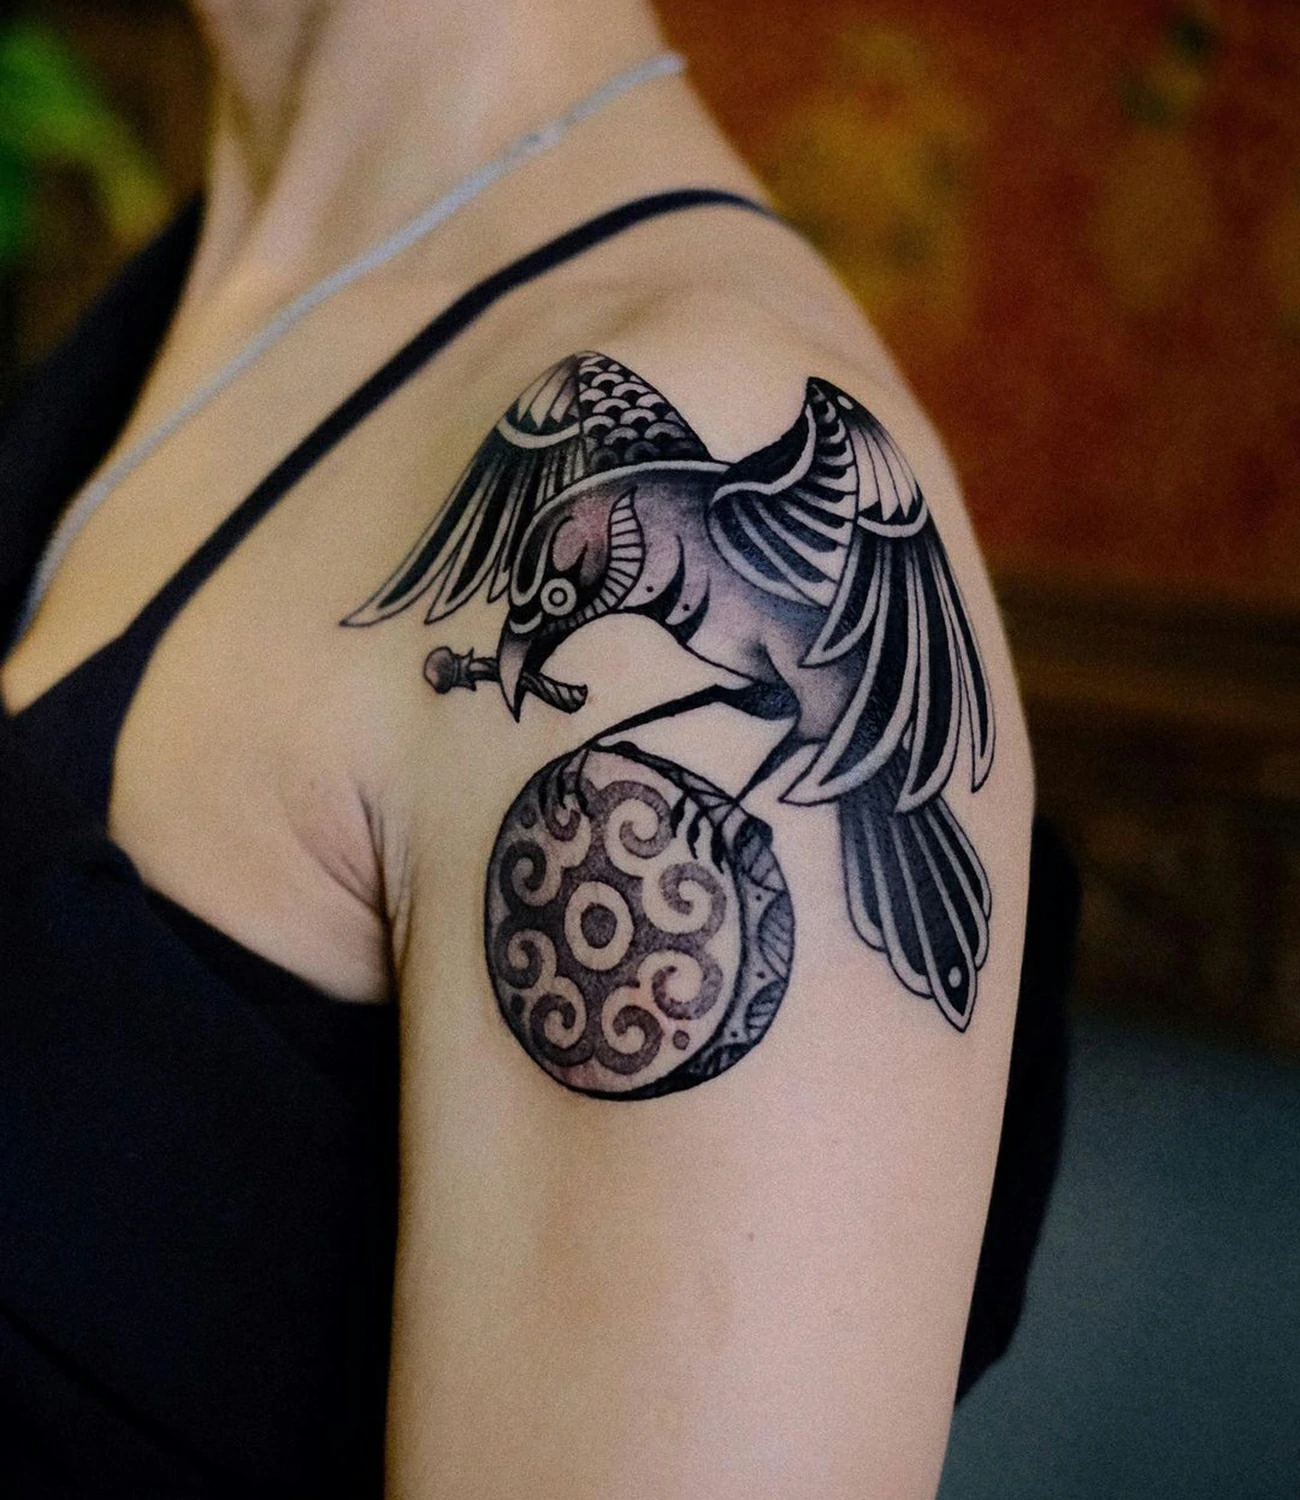 Traditional raven tattoo: Classic raven tattoo using traditional tattoo techniques.